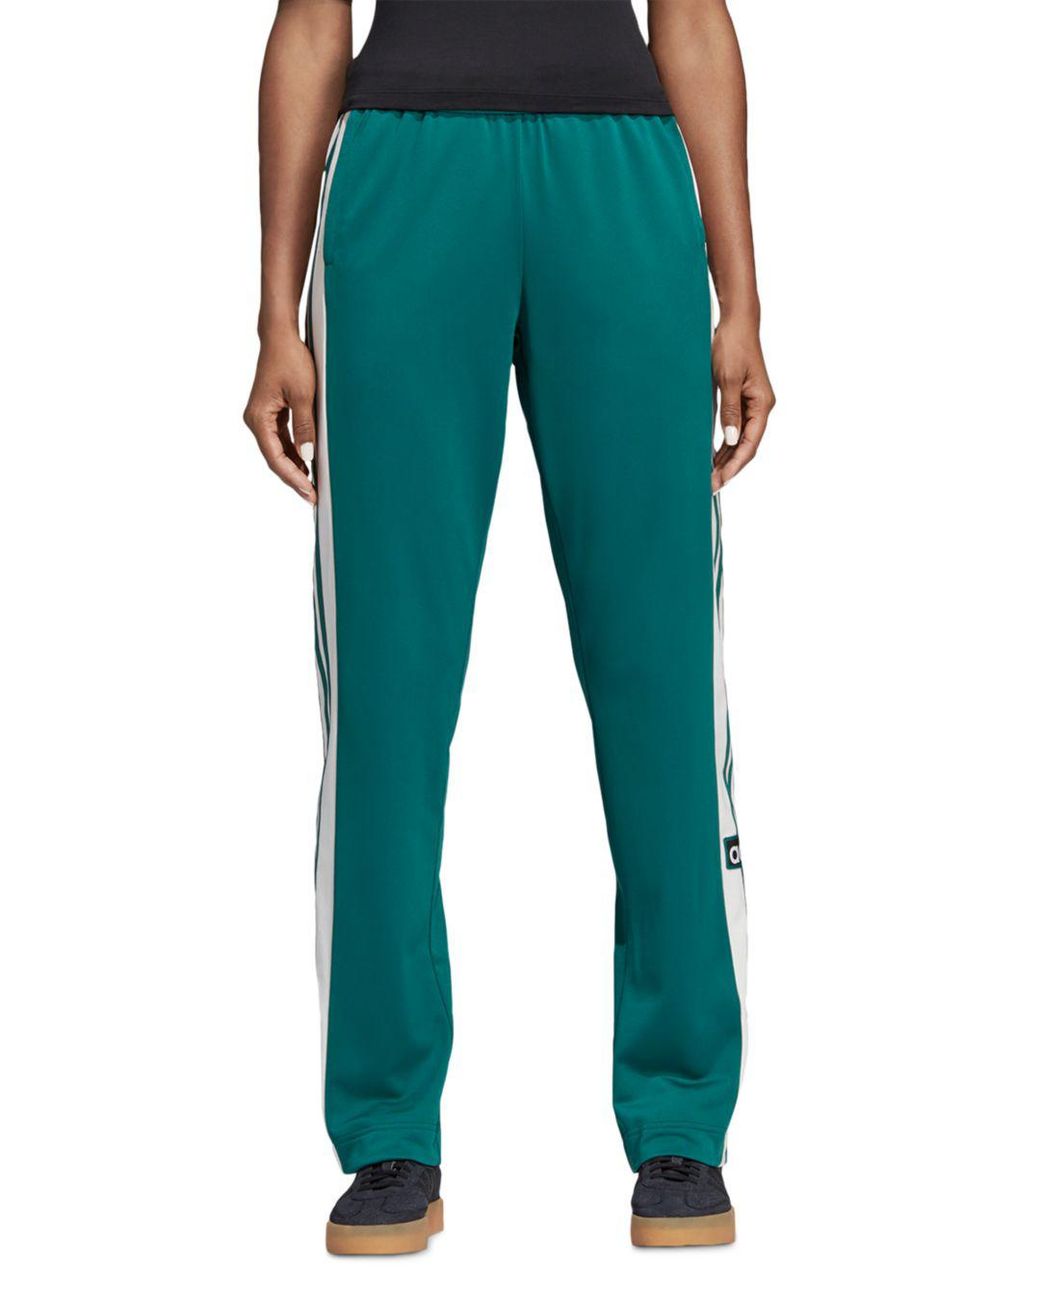 adidas Originals Women's Green Adibreak Side-snap Track Pants